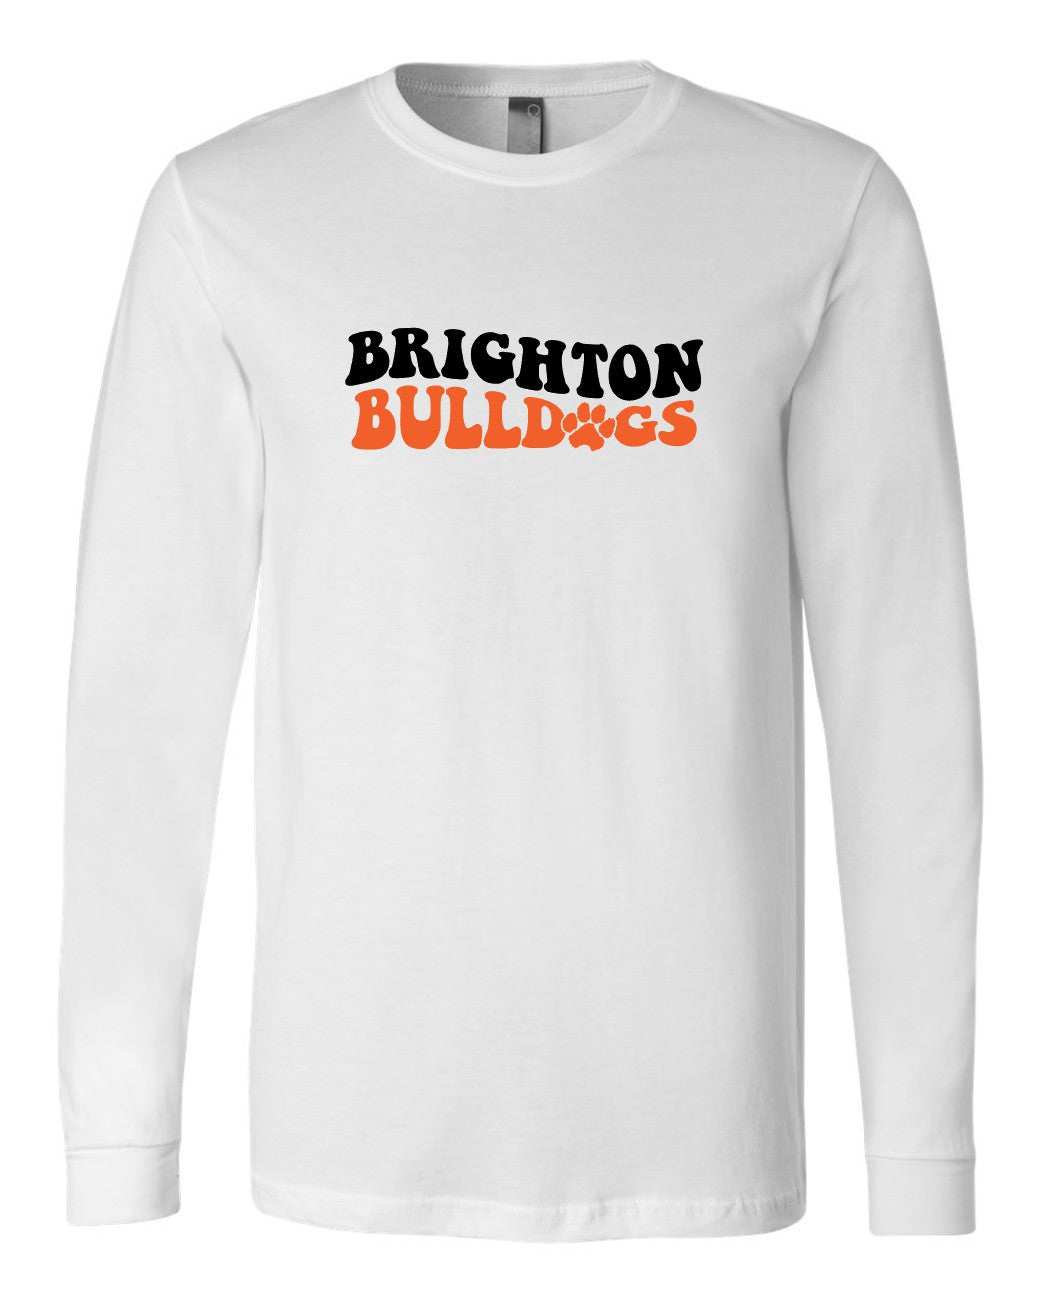 Brighton Bulldogs Wavy Premium Long Sleeve Tee - B160